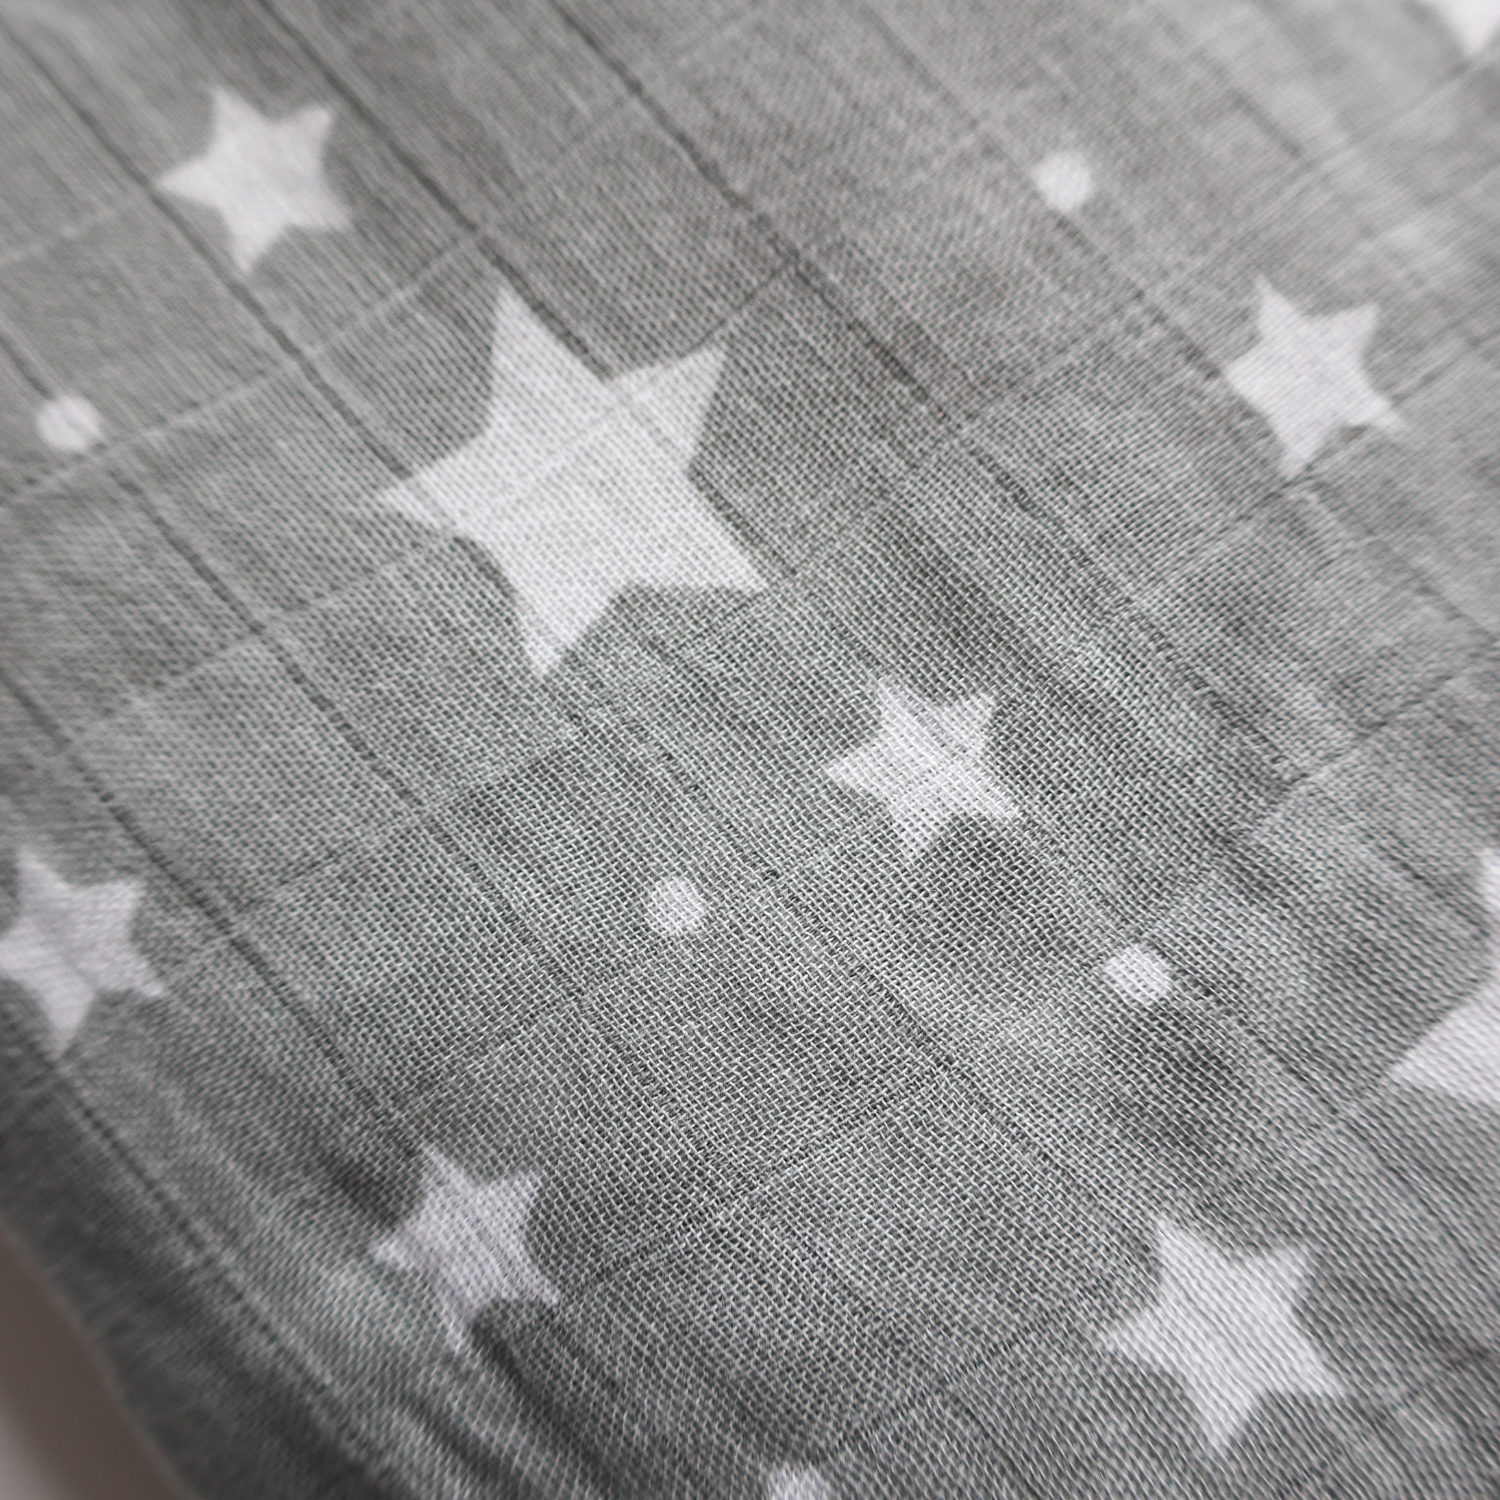 Starry Night Large Muslin Blanket